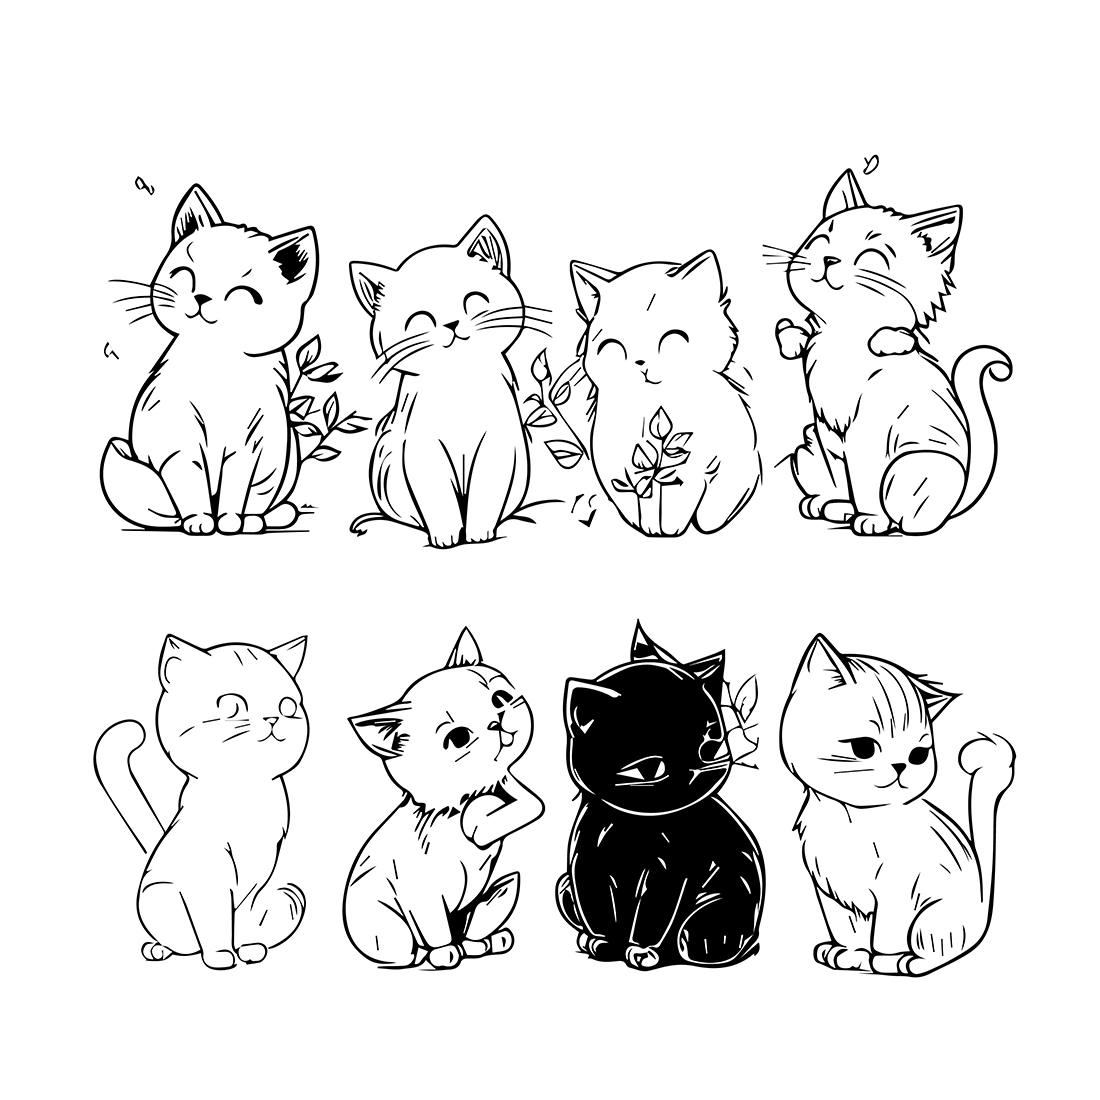 Cute Cat Bundle cover image.